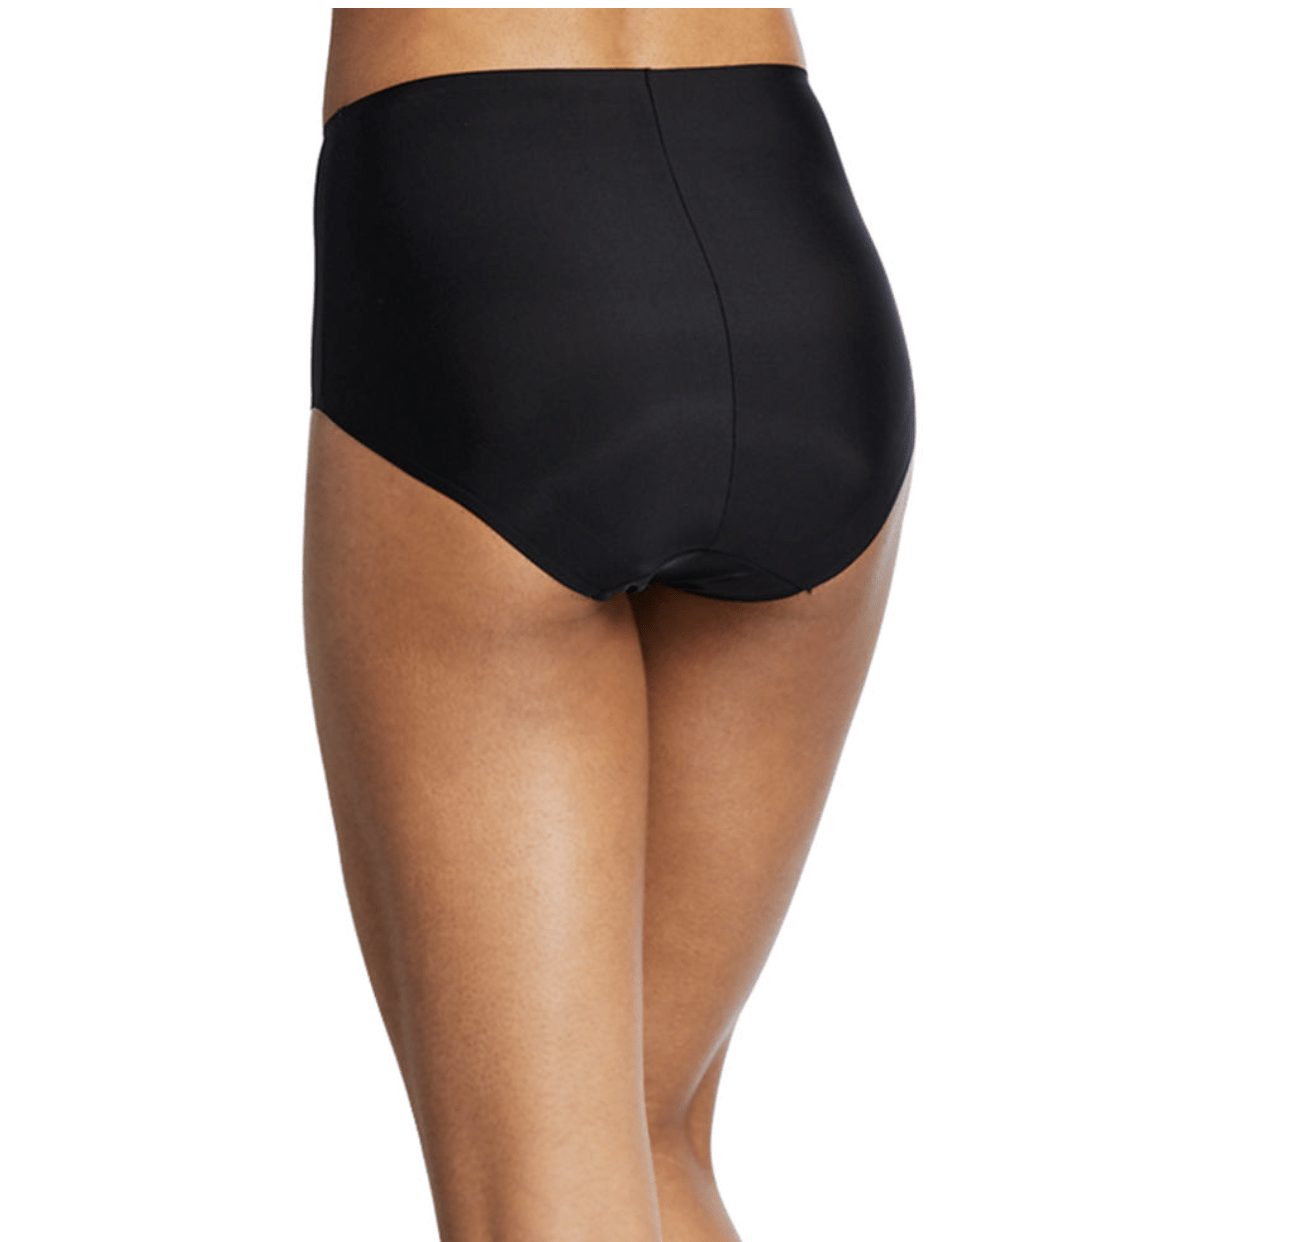 TC womens underwear Large / Black Microfiber No Show Lines Brief Panties